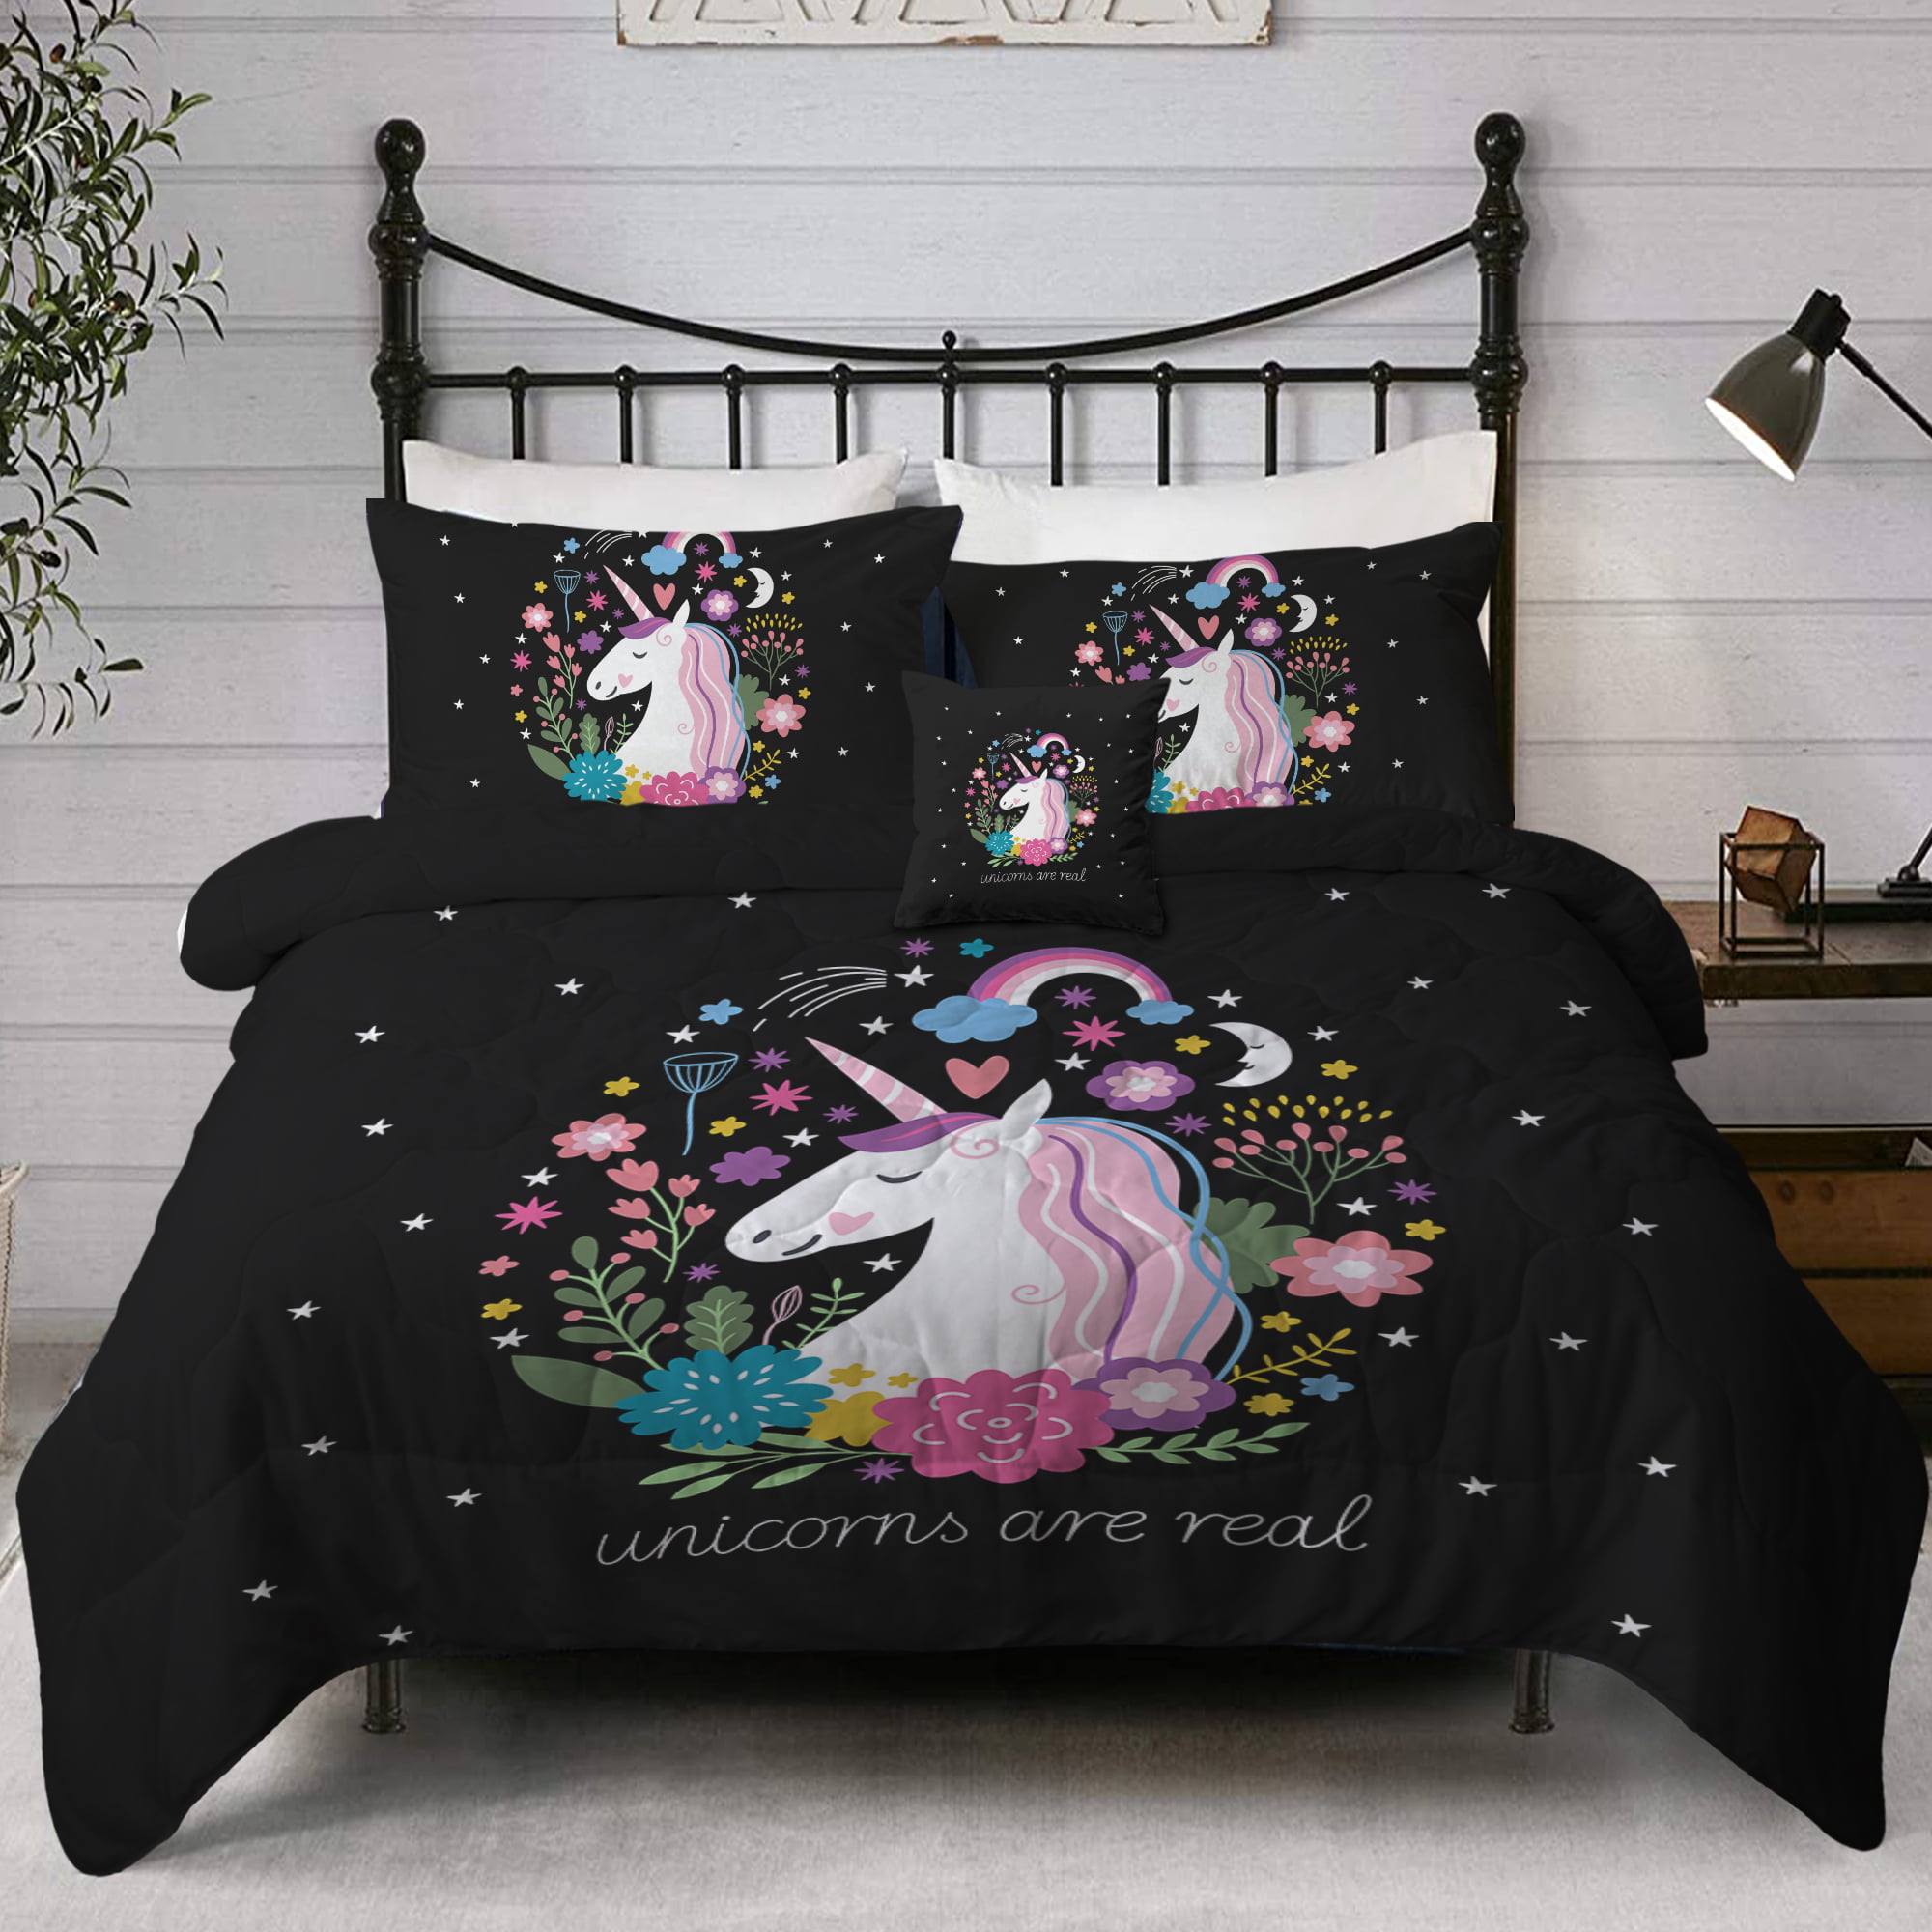 Unicorn Horse Quilt Cover Reversible Duvet Set Home Hotel Bedding 